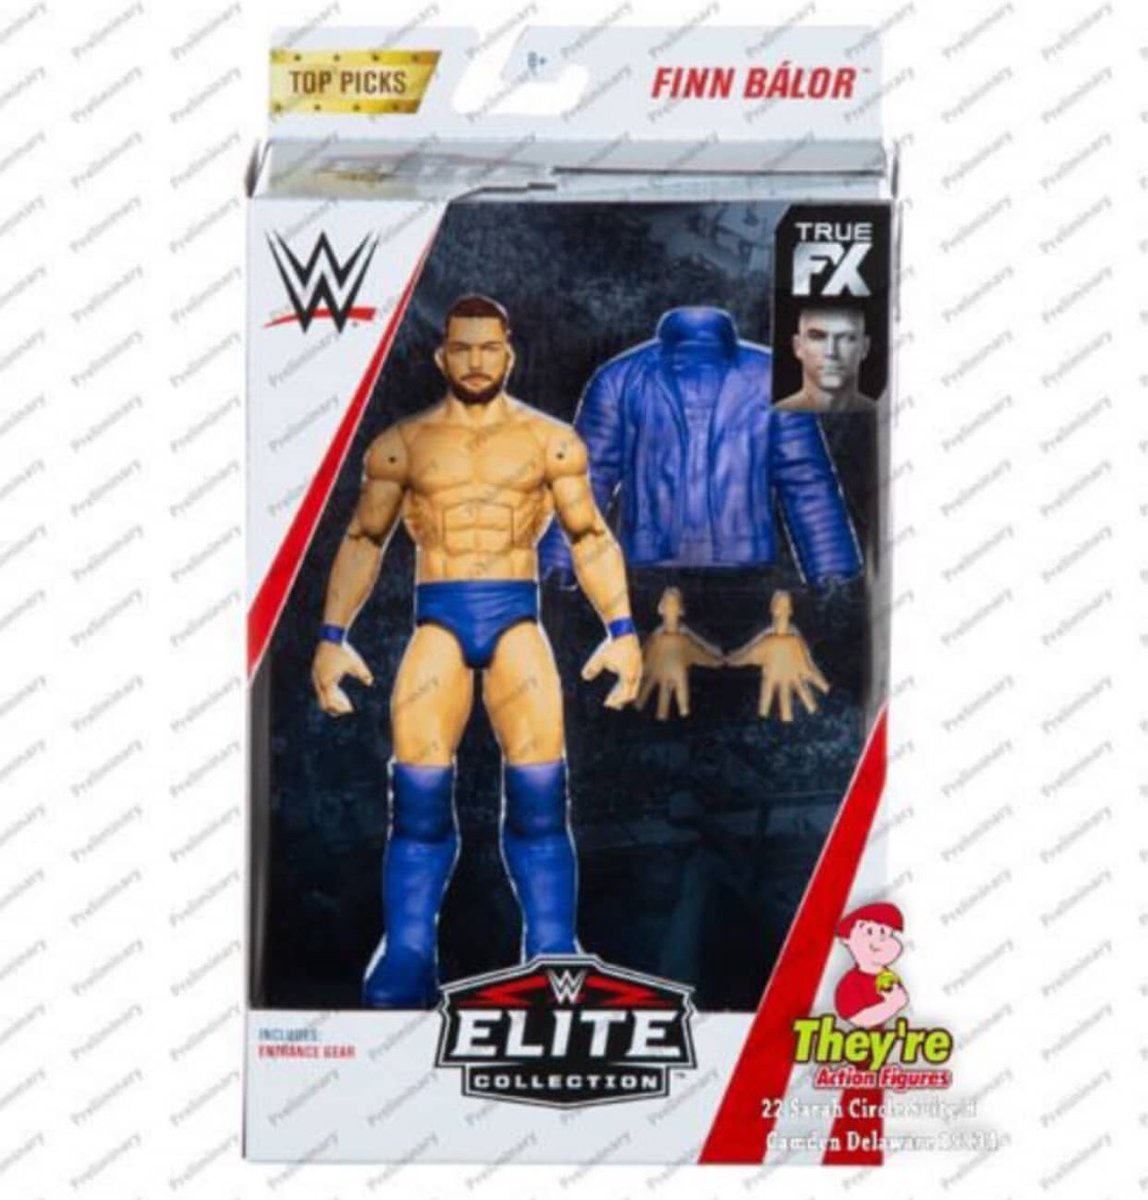 MATTEL Finn Balor WWE Elite Collection Top Picks Toy Wrestling Action Figure 